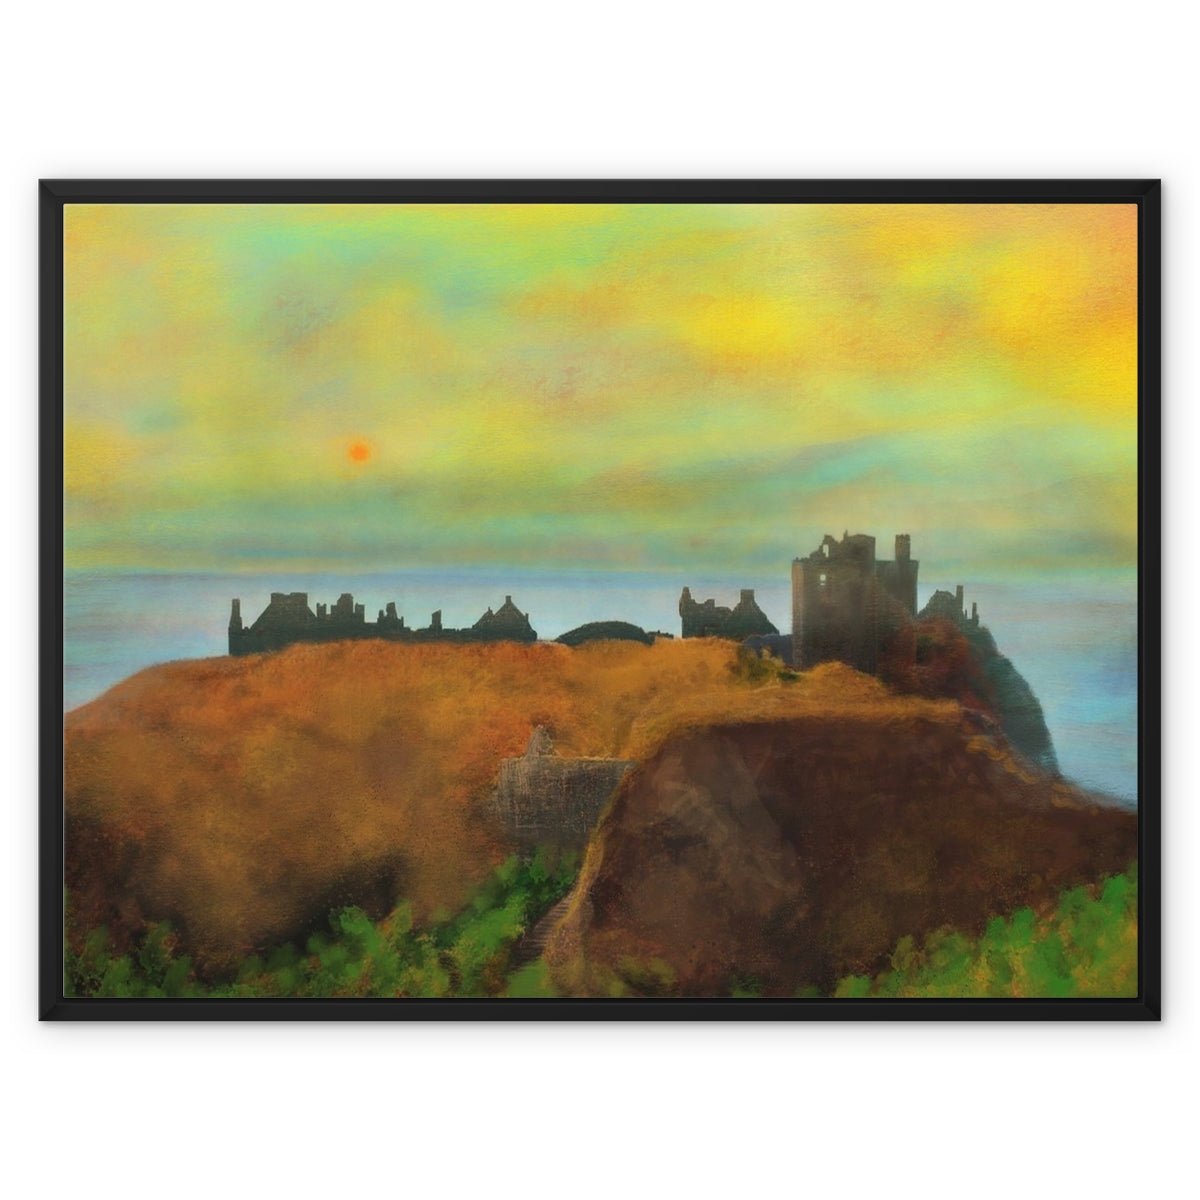 Dunnottar Castle Dusk Painting | Framed Canvas From Scotland-Floating Framed Canvas Prints-Historic & Iconic Scotland Art Gallery-32"x24"-Black Frame-Paintings, Prints, Homeware, Art Gifts From Scotland By Scottish Artist Kevin Hunter